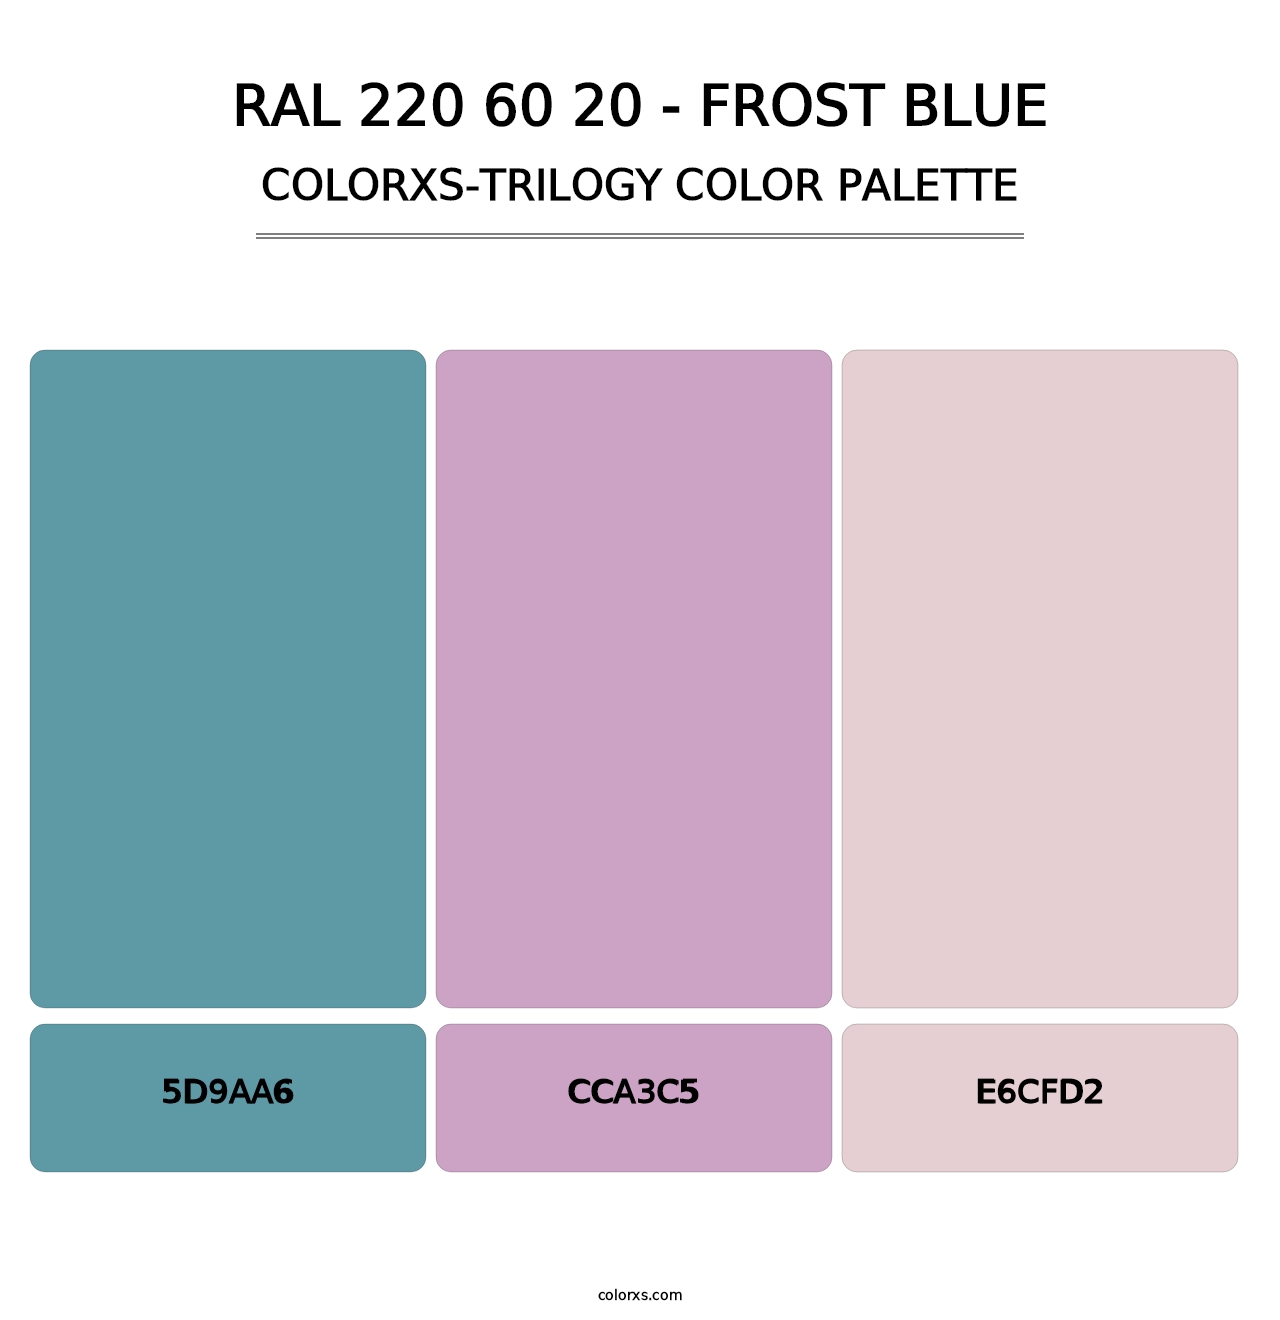 RAL 220 60 20 - Frost Blue - Colorxs Trilogy Palette